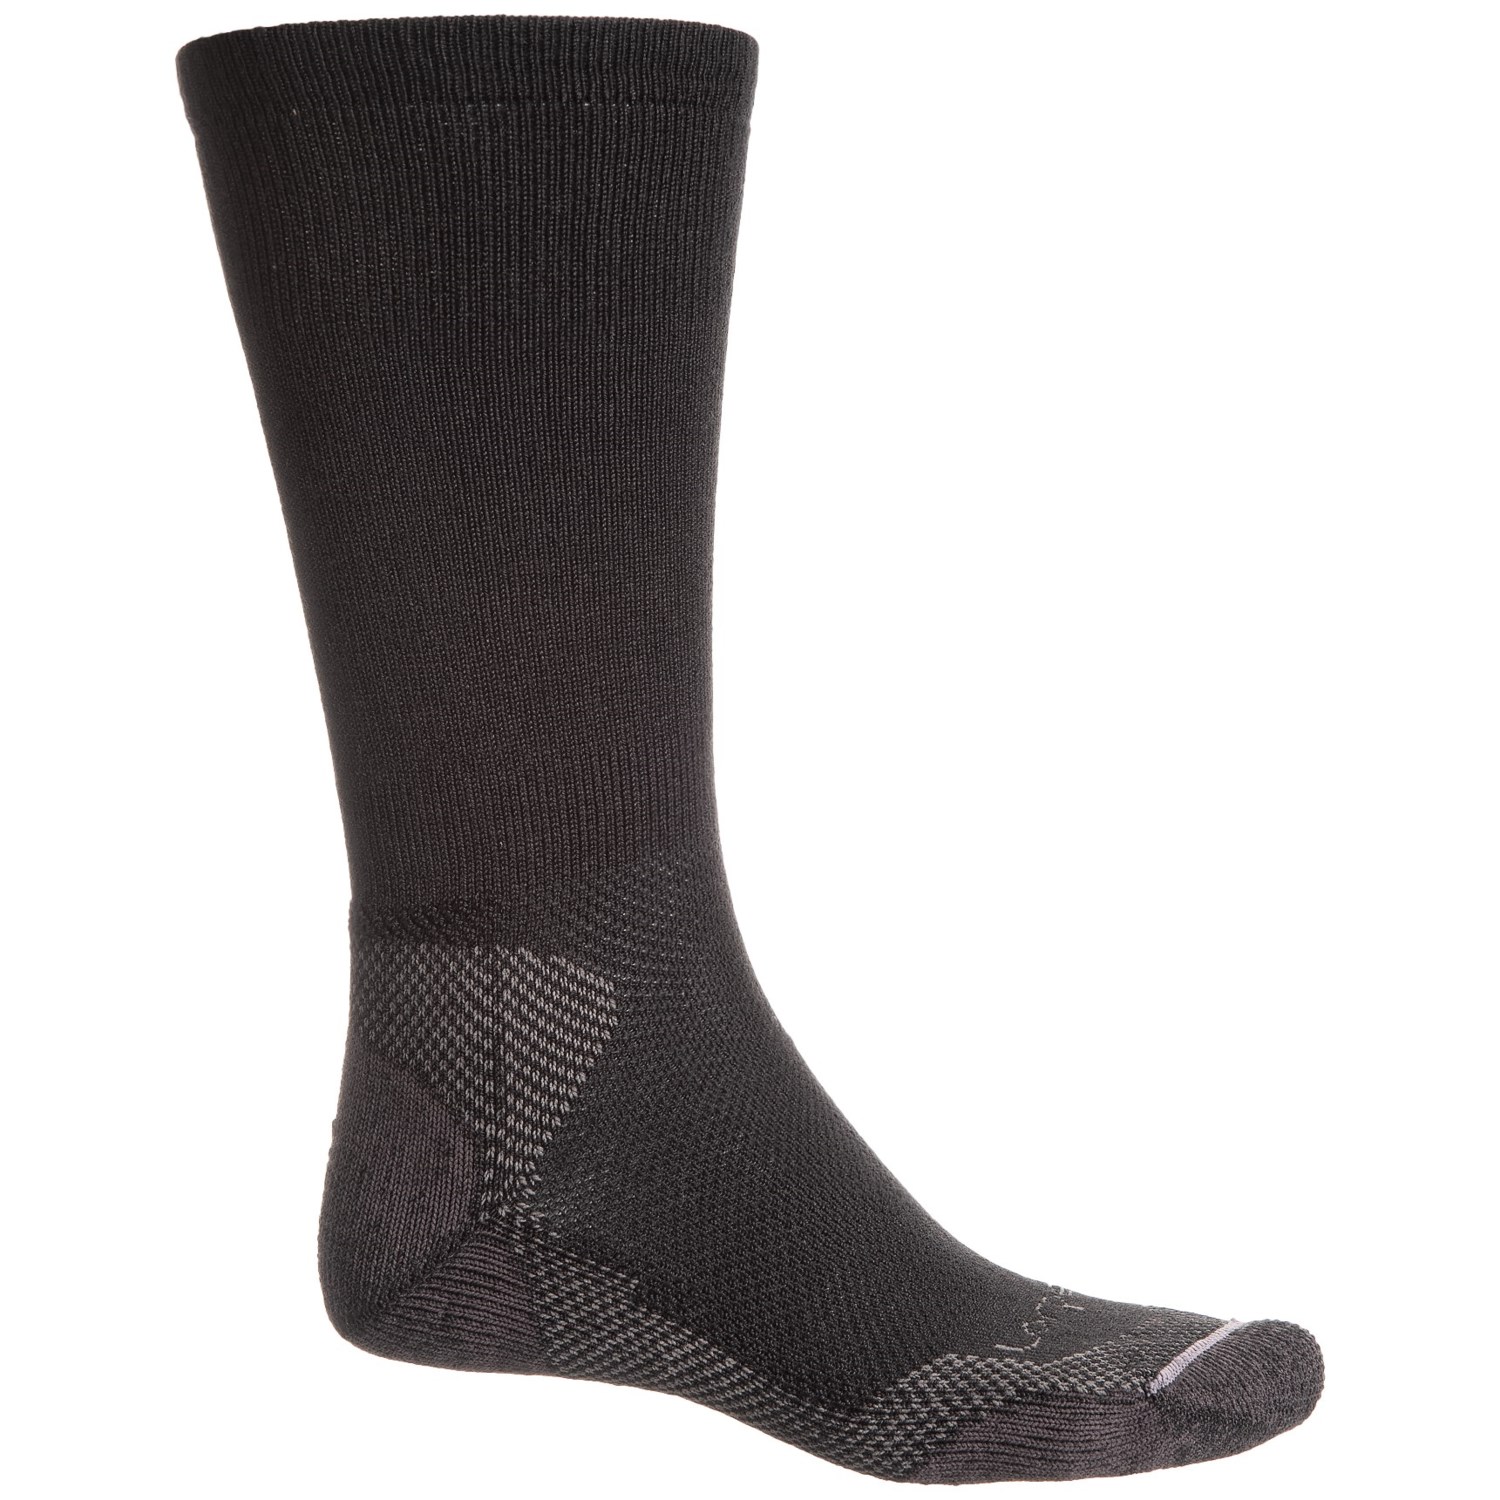 Lorpen Uniform CoolMax® Socks – Crew (For Men and Women)